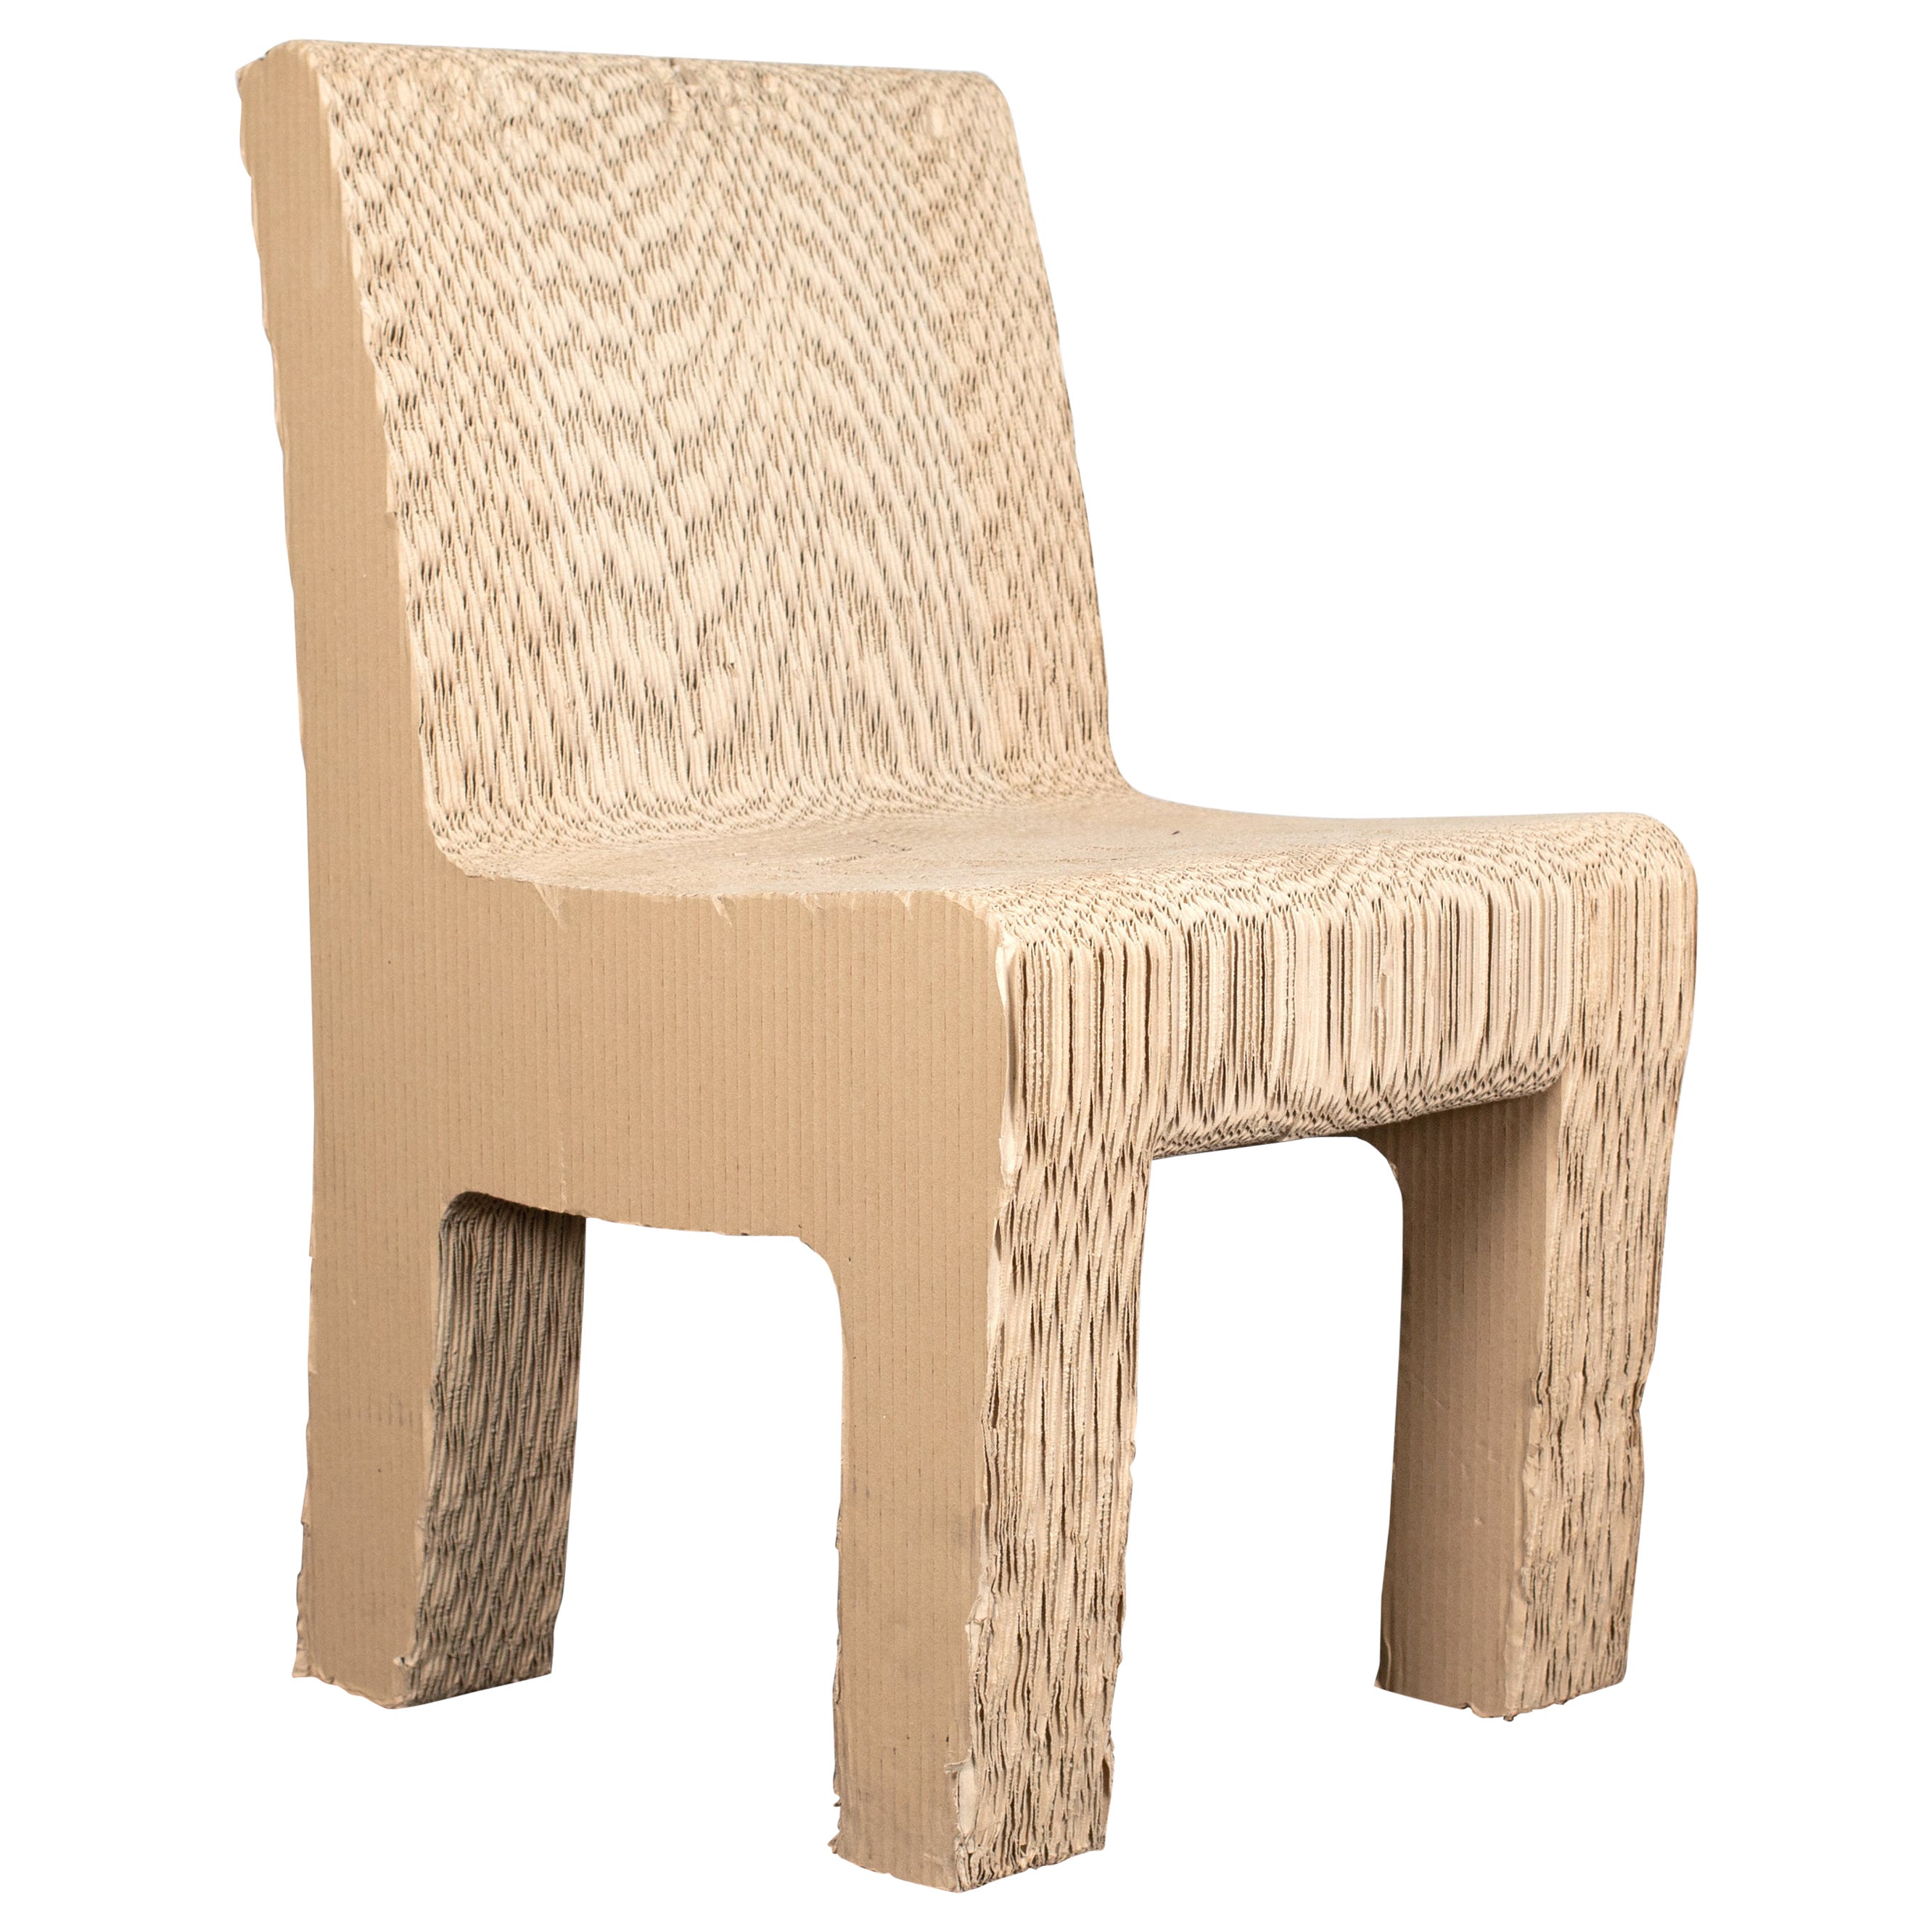 Whimsical Postmodern Cardboard Sculptural Chair